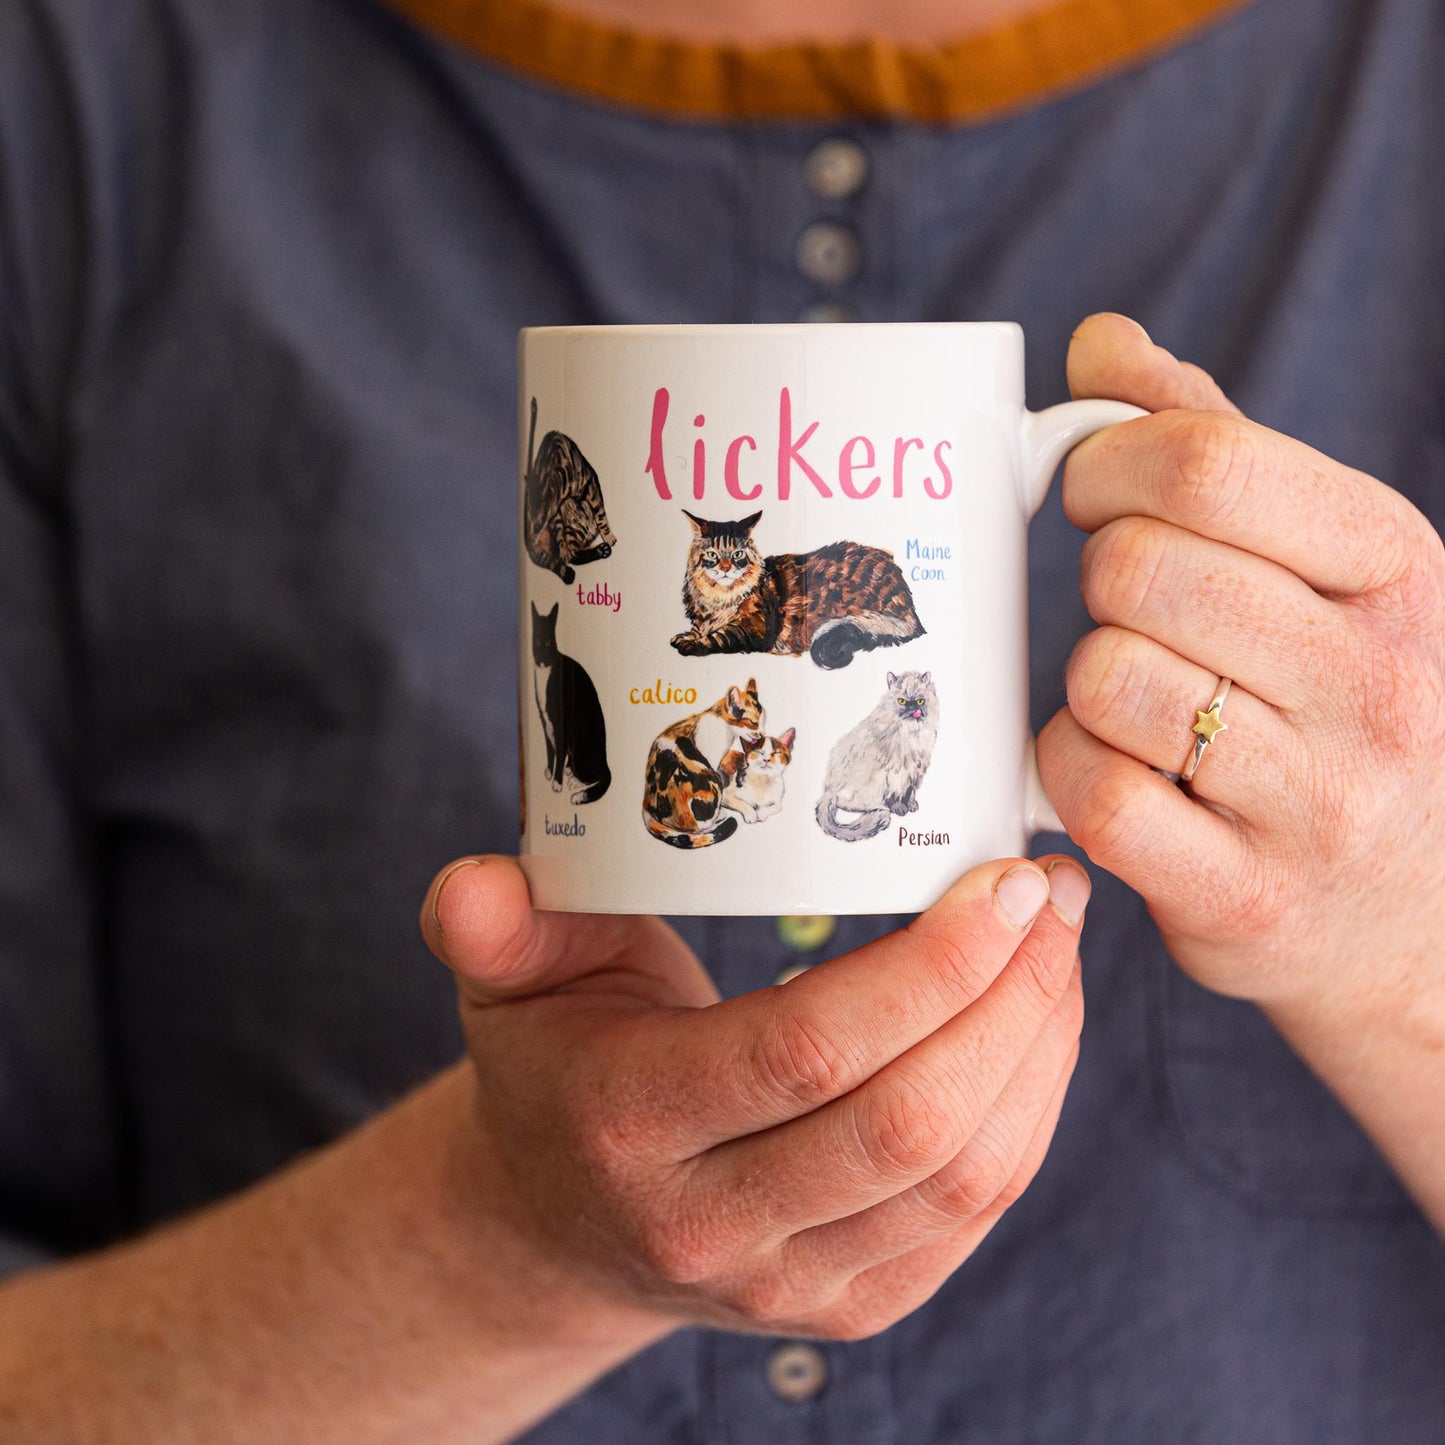 Lickers Ceramic Cat Mug